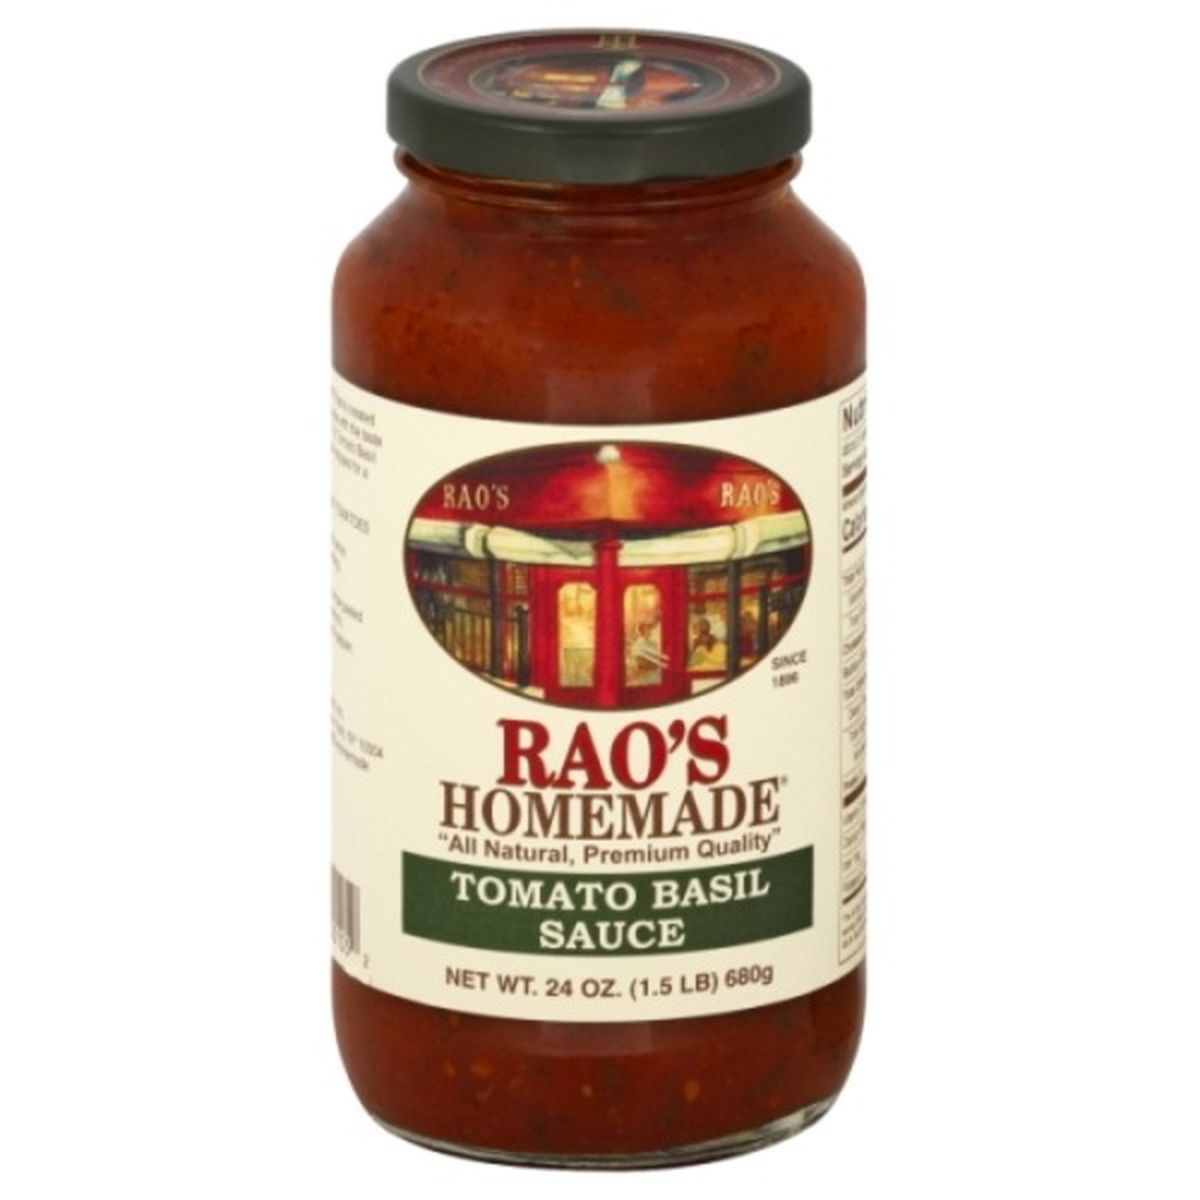 Calories in Rao's Homemade Homemade Tomato Basil Sauce